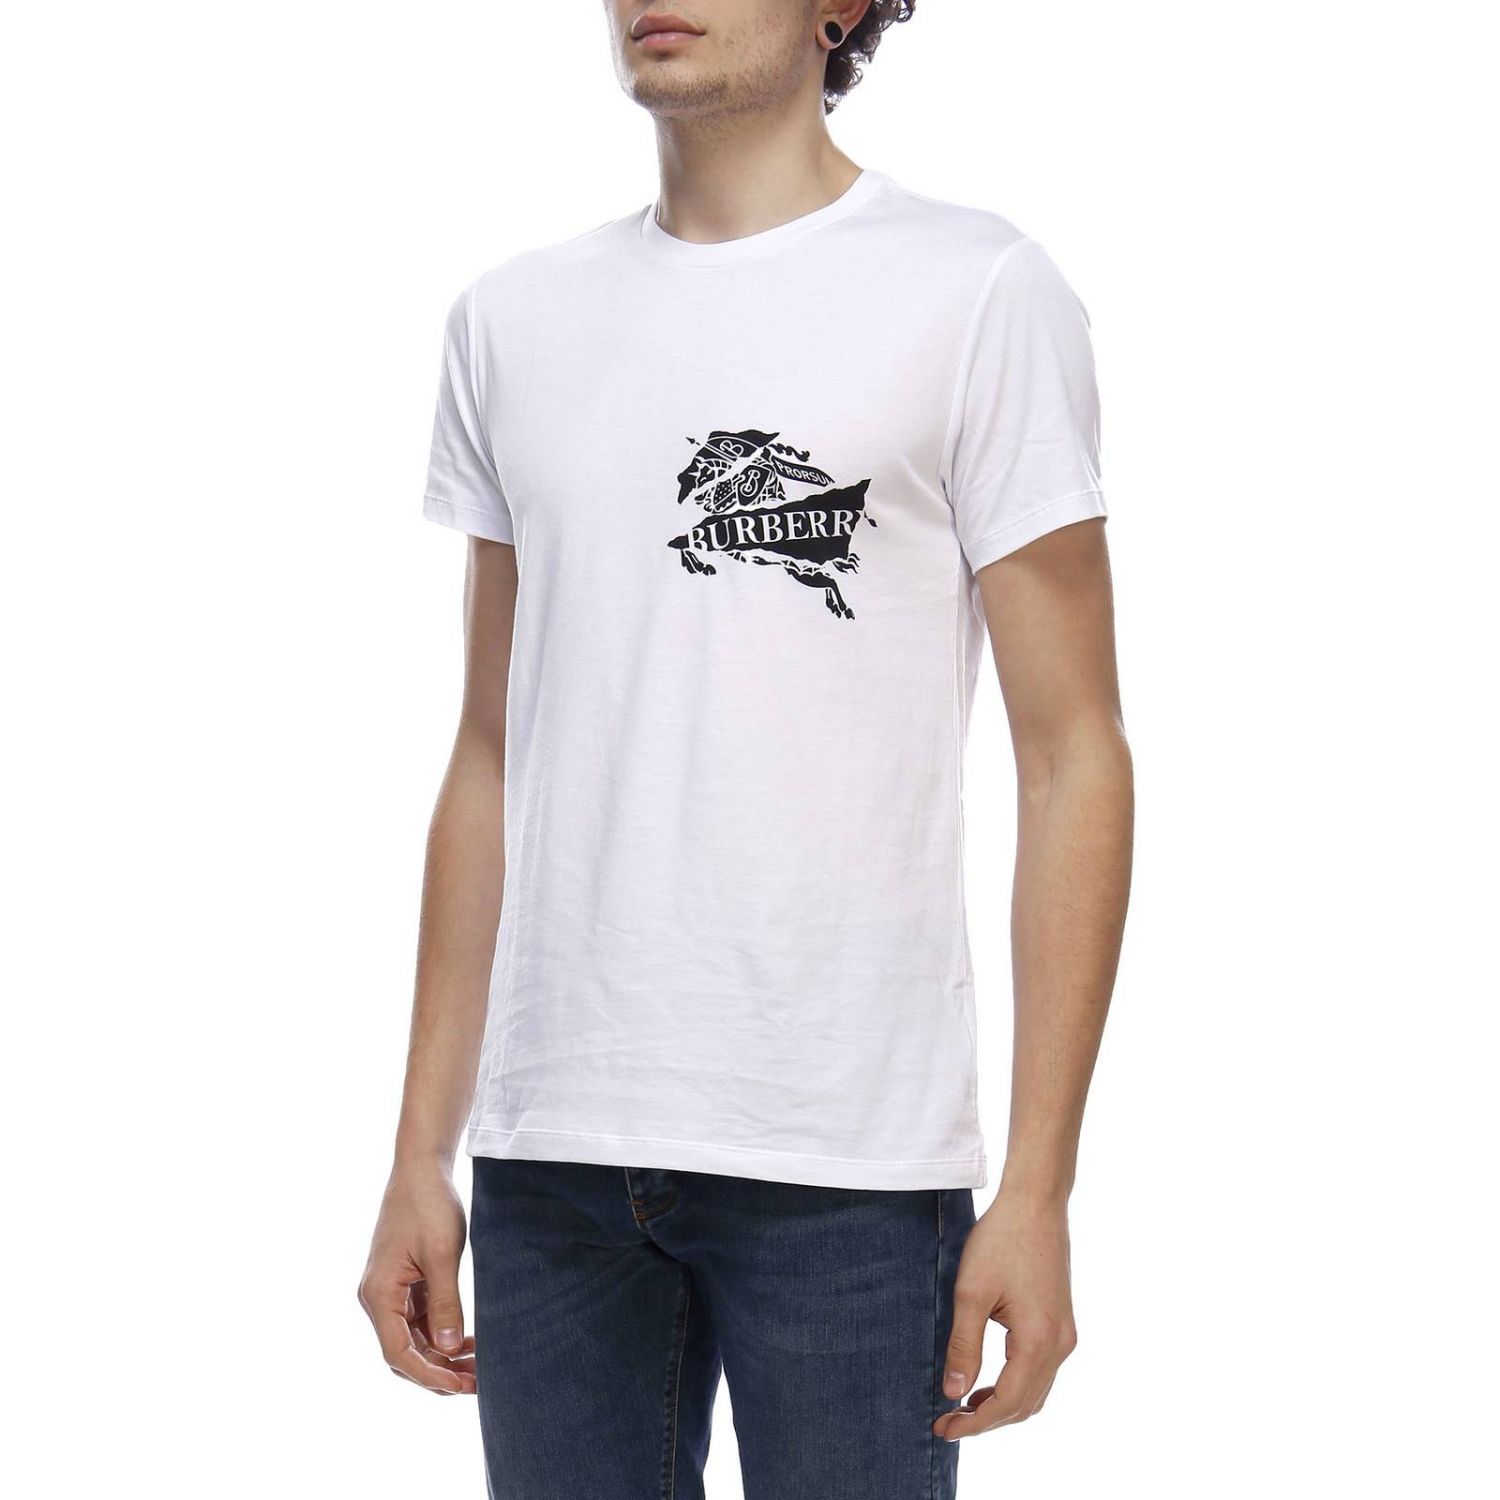 Burberry Outlet: T-shirt men | T-Shirt Burberry Men White | T-Shirt ...